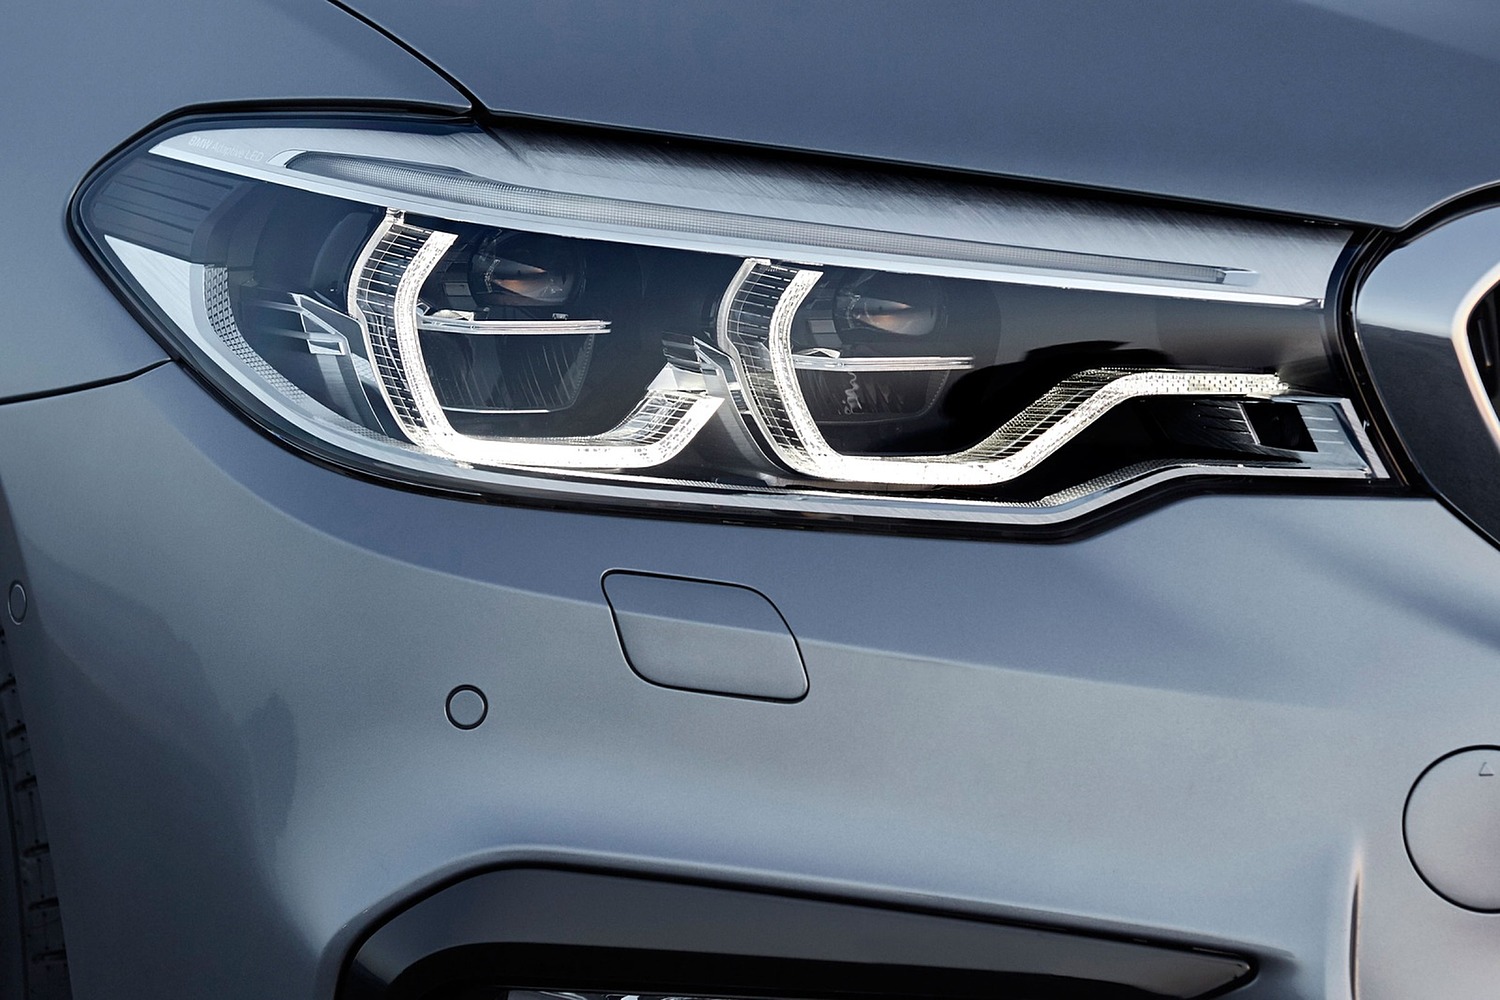 BMW 5 Series 540i Sedan Headlamp Detail (2017 model year shown)